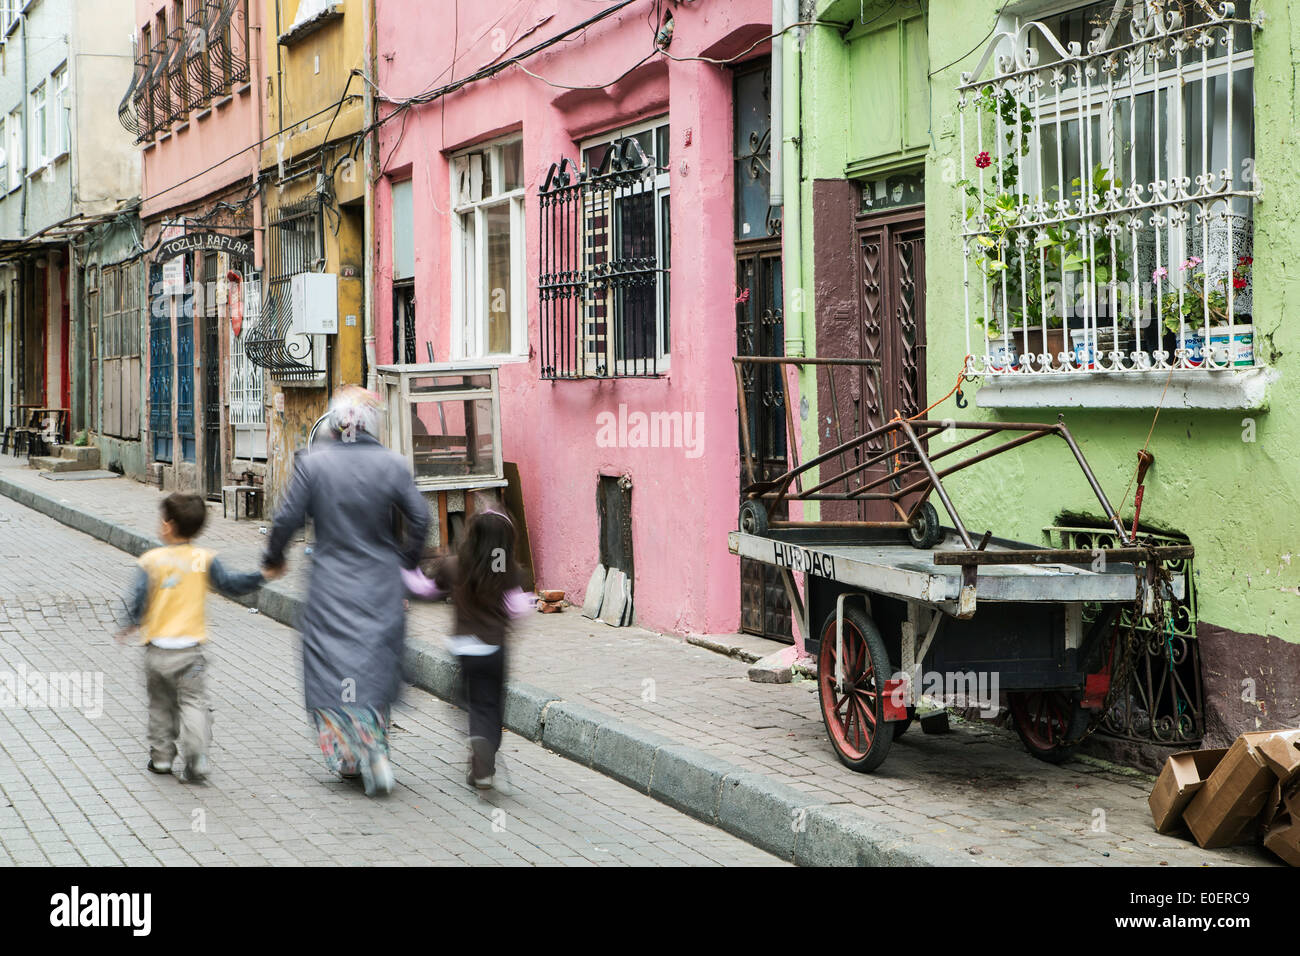 Woman and children, Balat and Fener historic neighborhoods area, Istanbul, Turkey Stock Photo